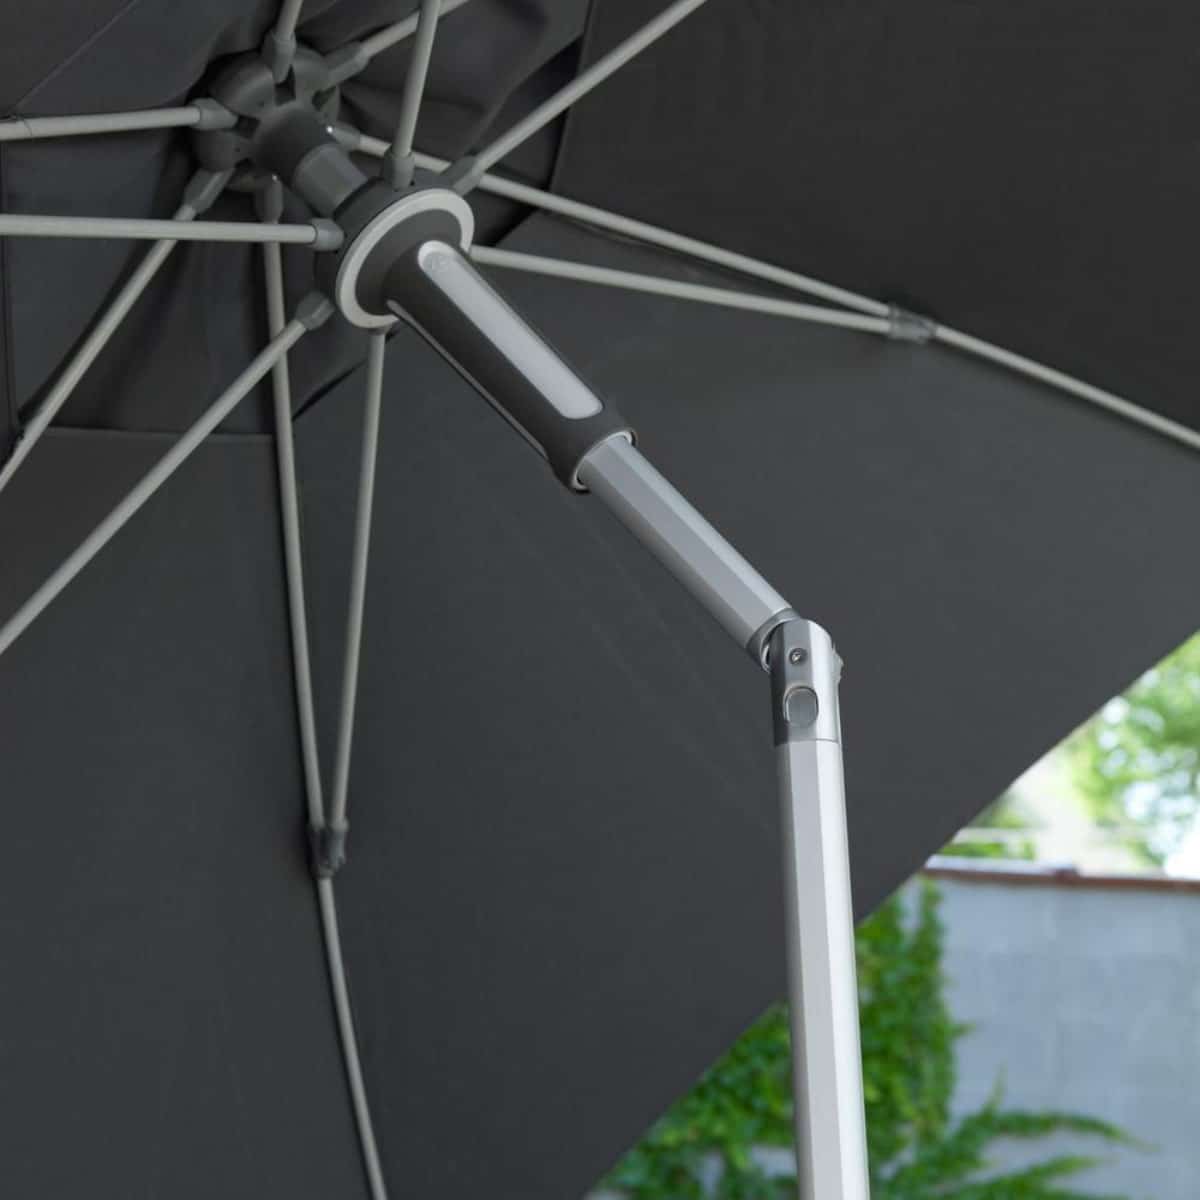 Patio Umbrella Features - Tilt